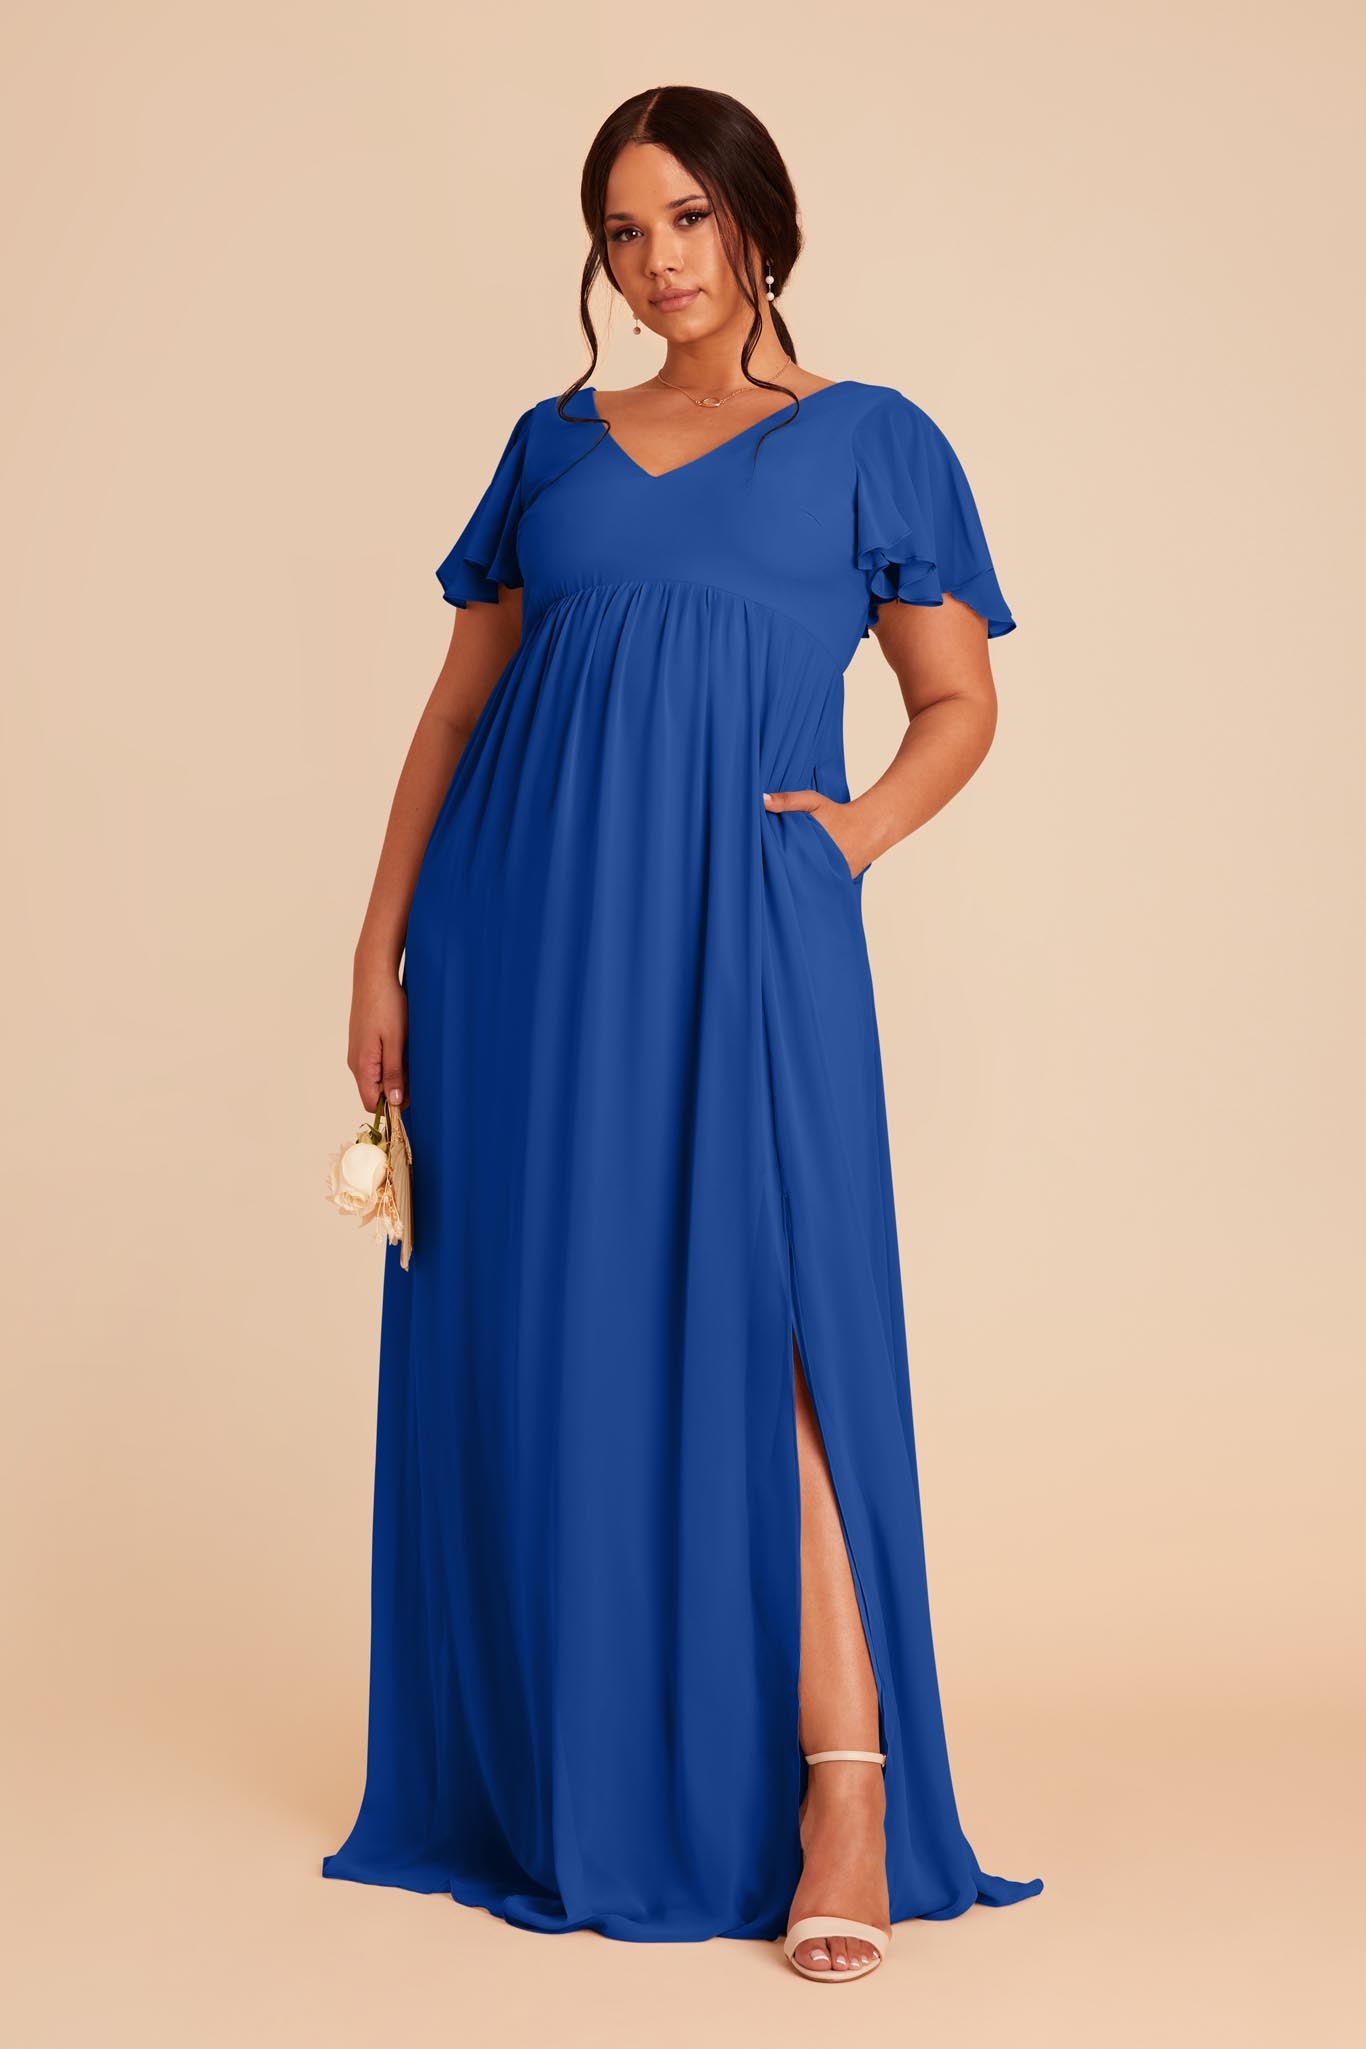 Cobalt Blue Hannah Empire Dress by Birdy Grey